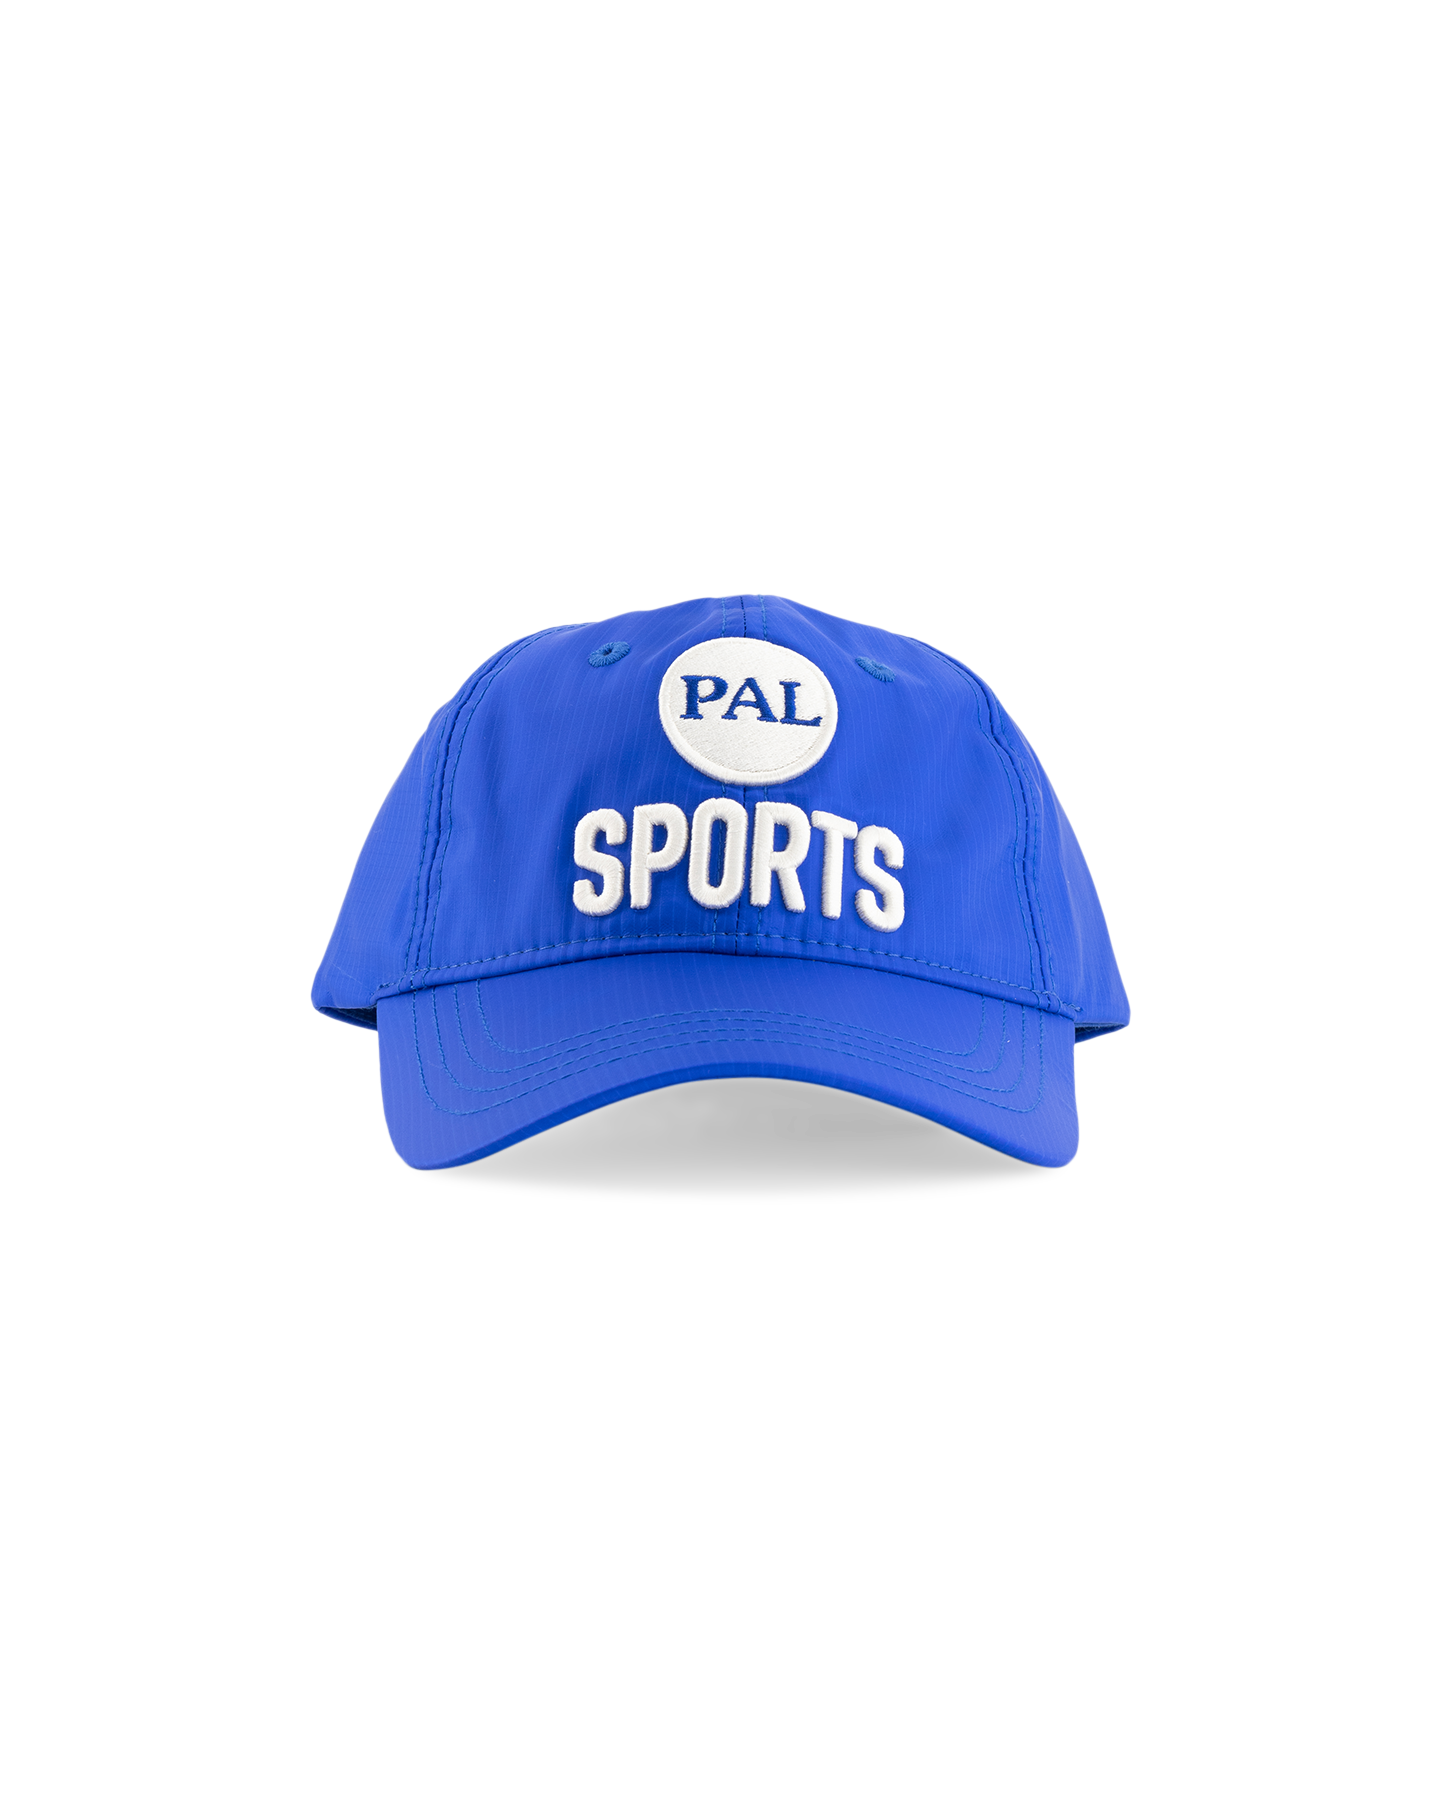 PAL Sporting Goods Broadcast Cap BLAUW 2